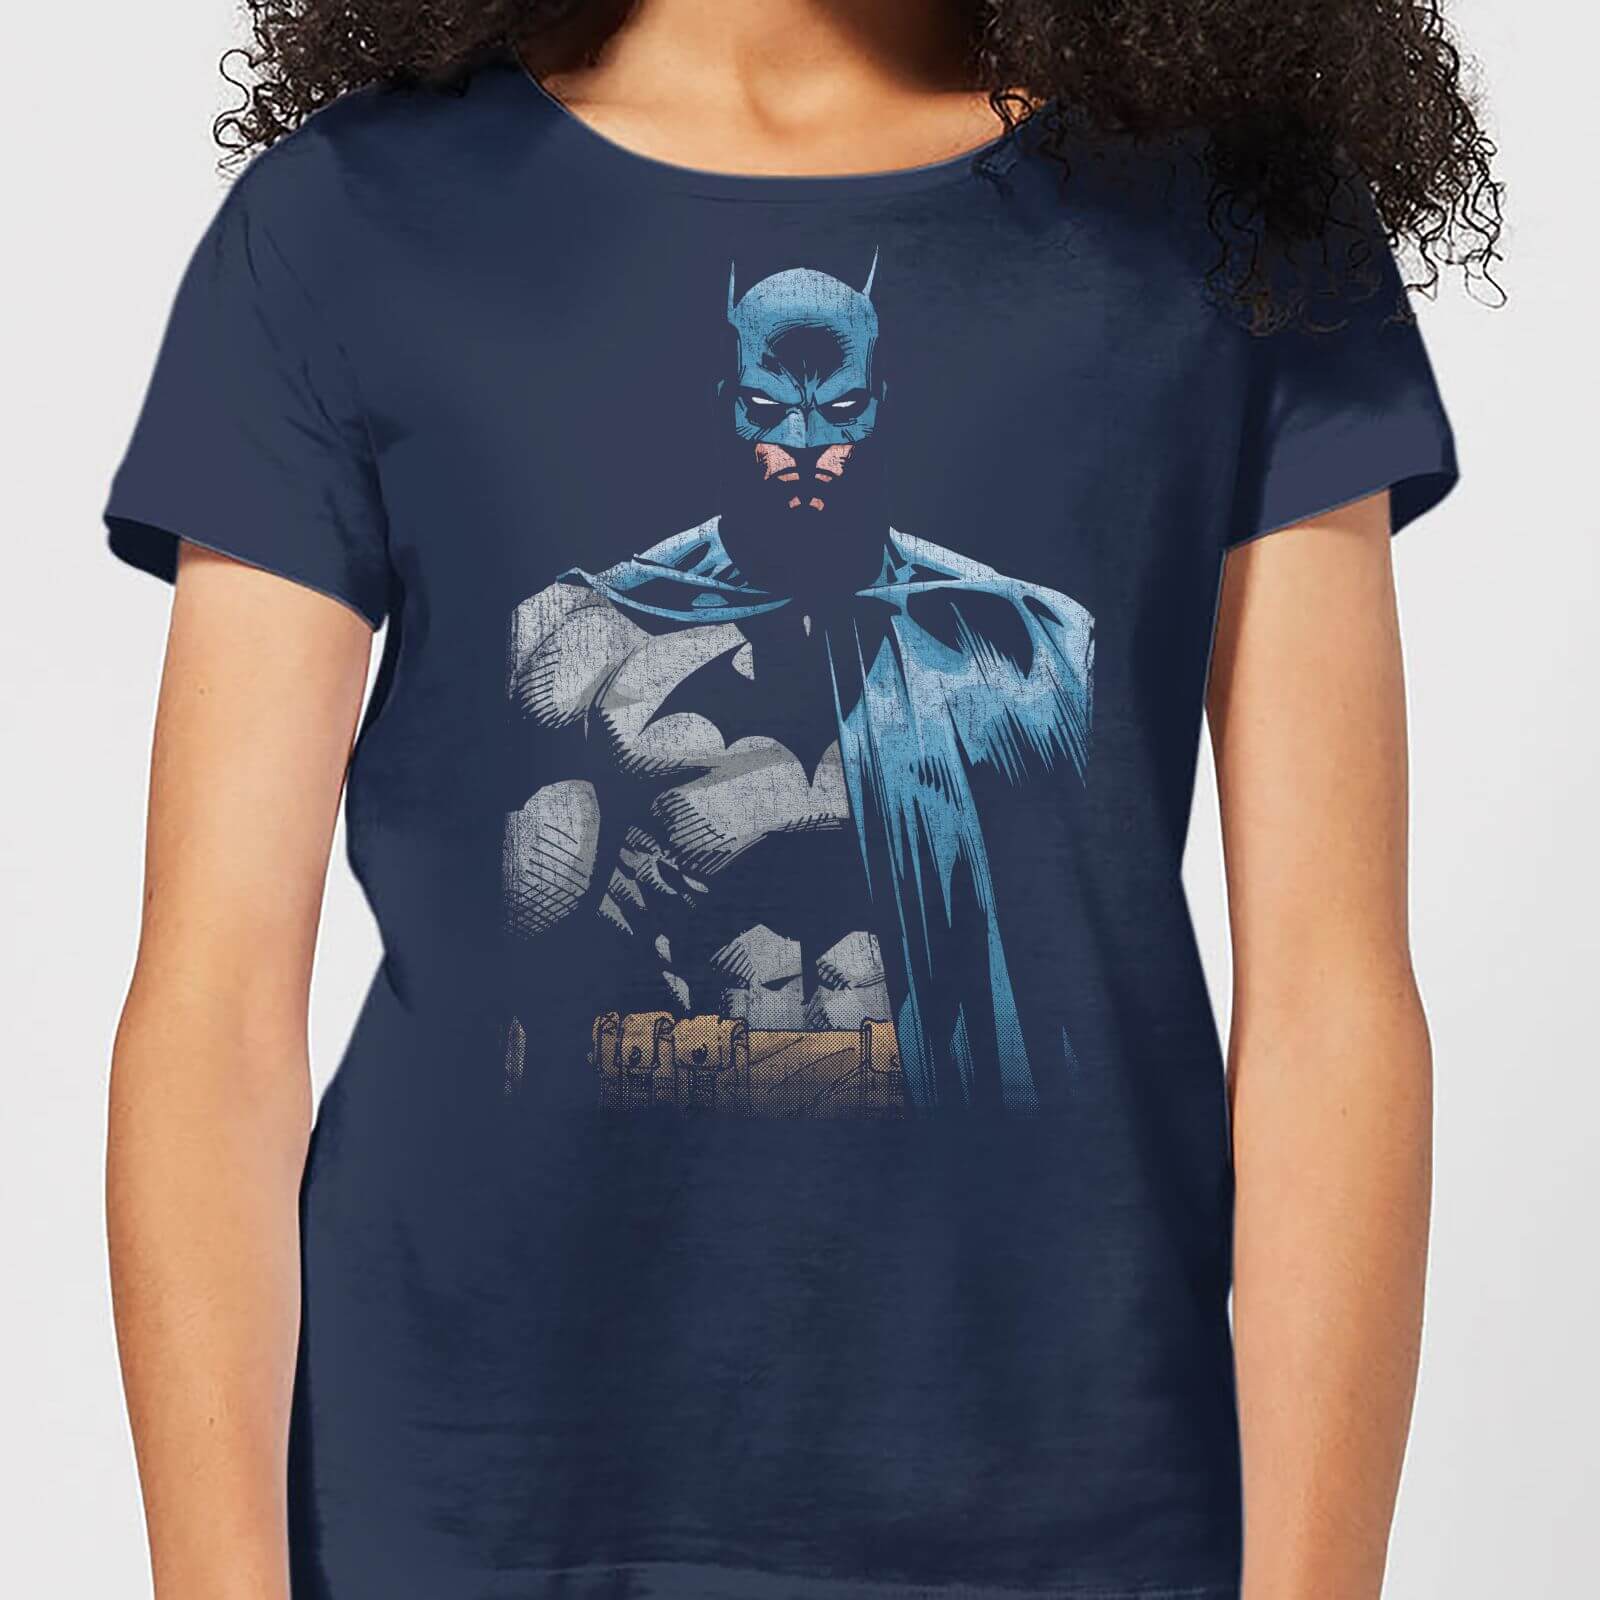 t-shirt dc comics batman close up - navy - donna - m - blu navy